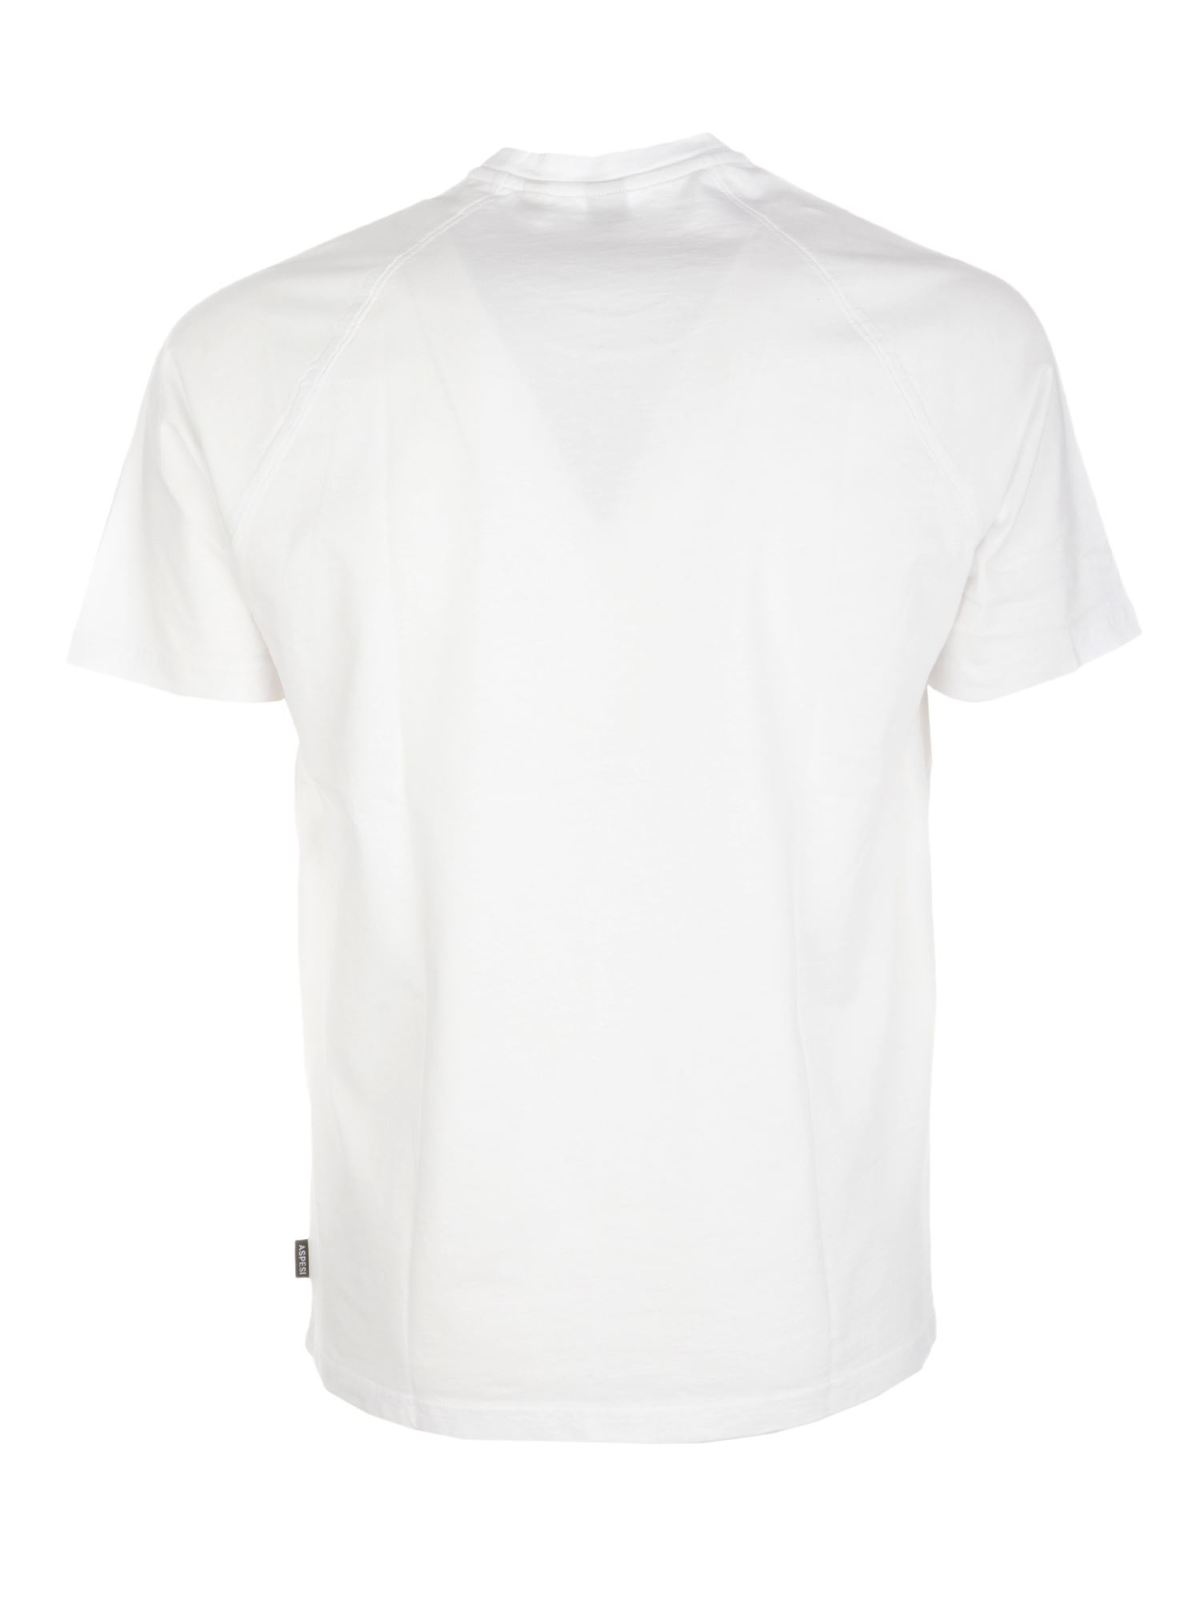 Shop Aspesi Camiseta - Blanco In White